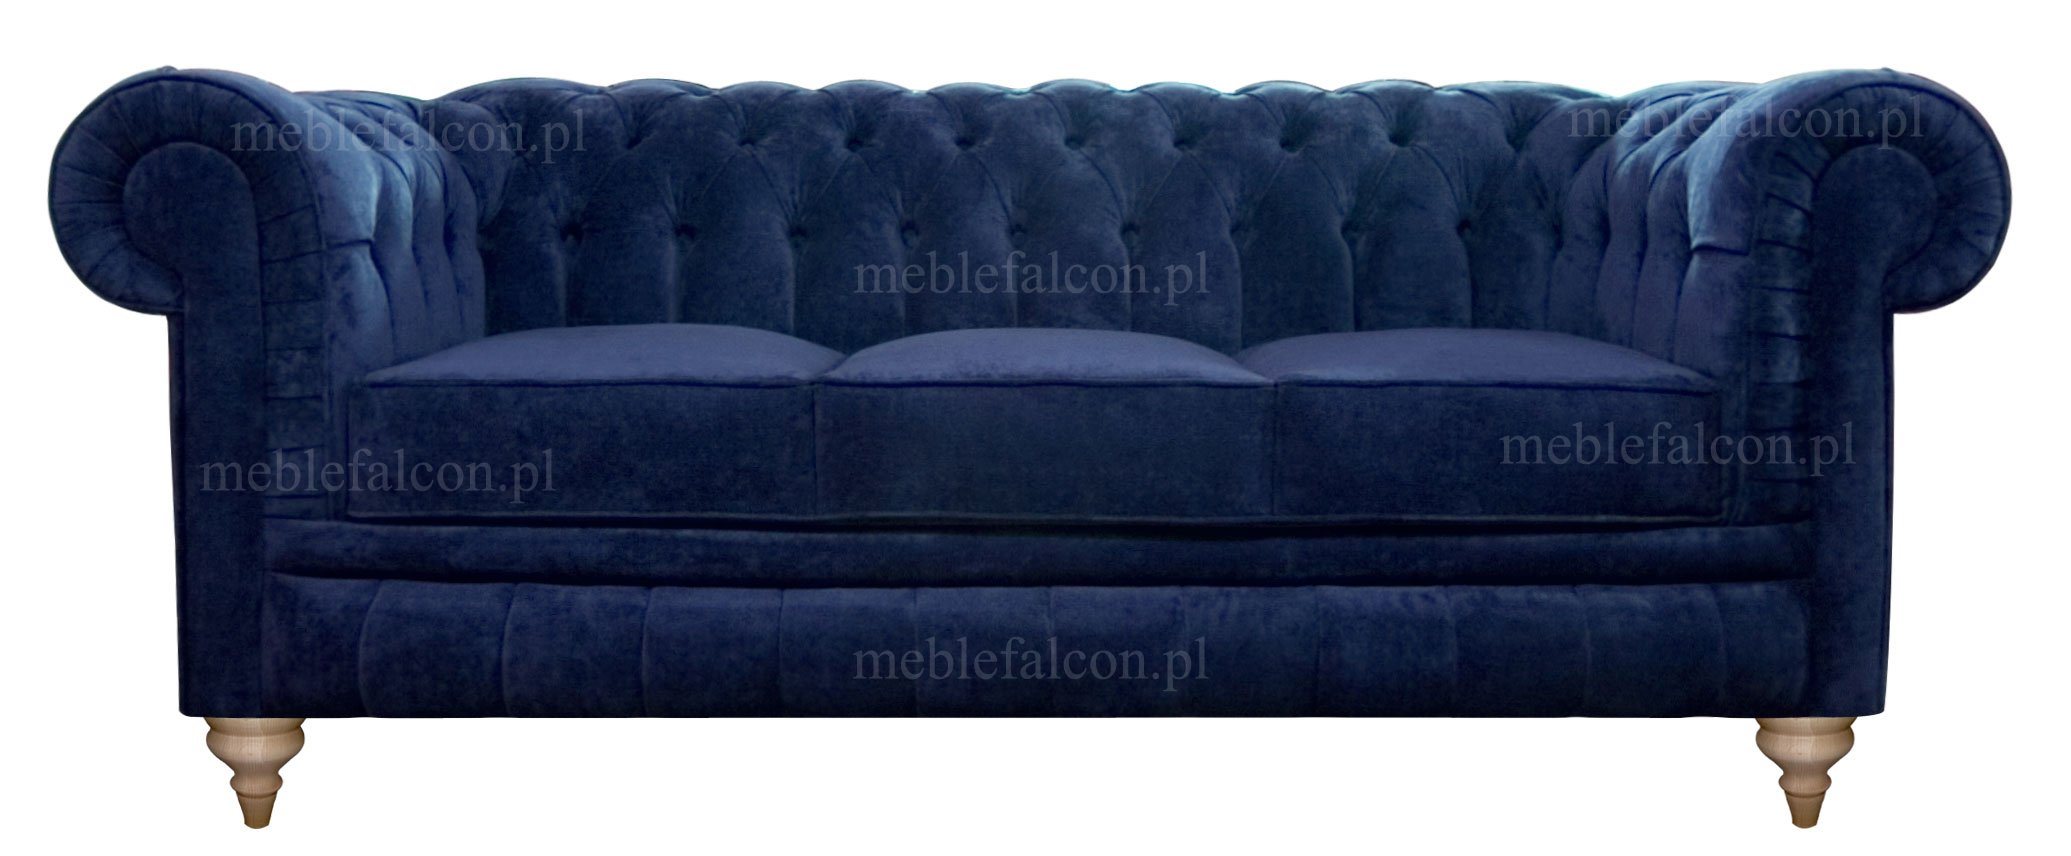 sofa pluszowa 3 osobowa sofa granatowa sofa w tapicerce pluszowej sofa stylowa salonowa pikowana